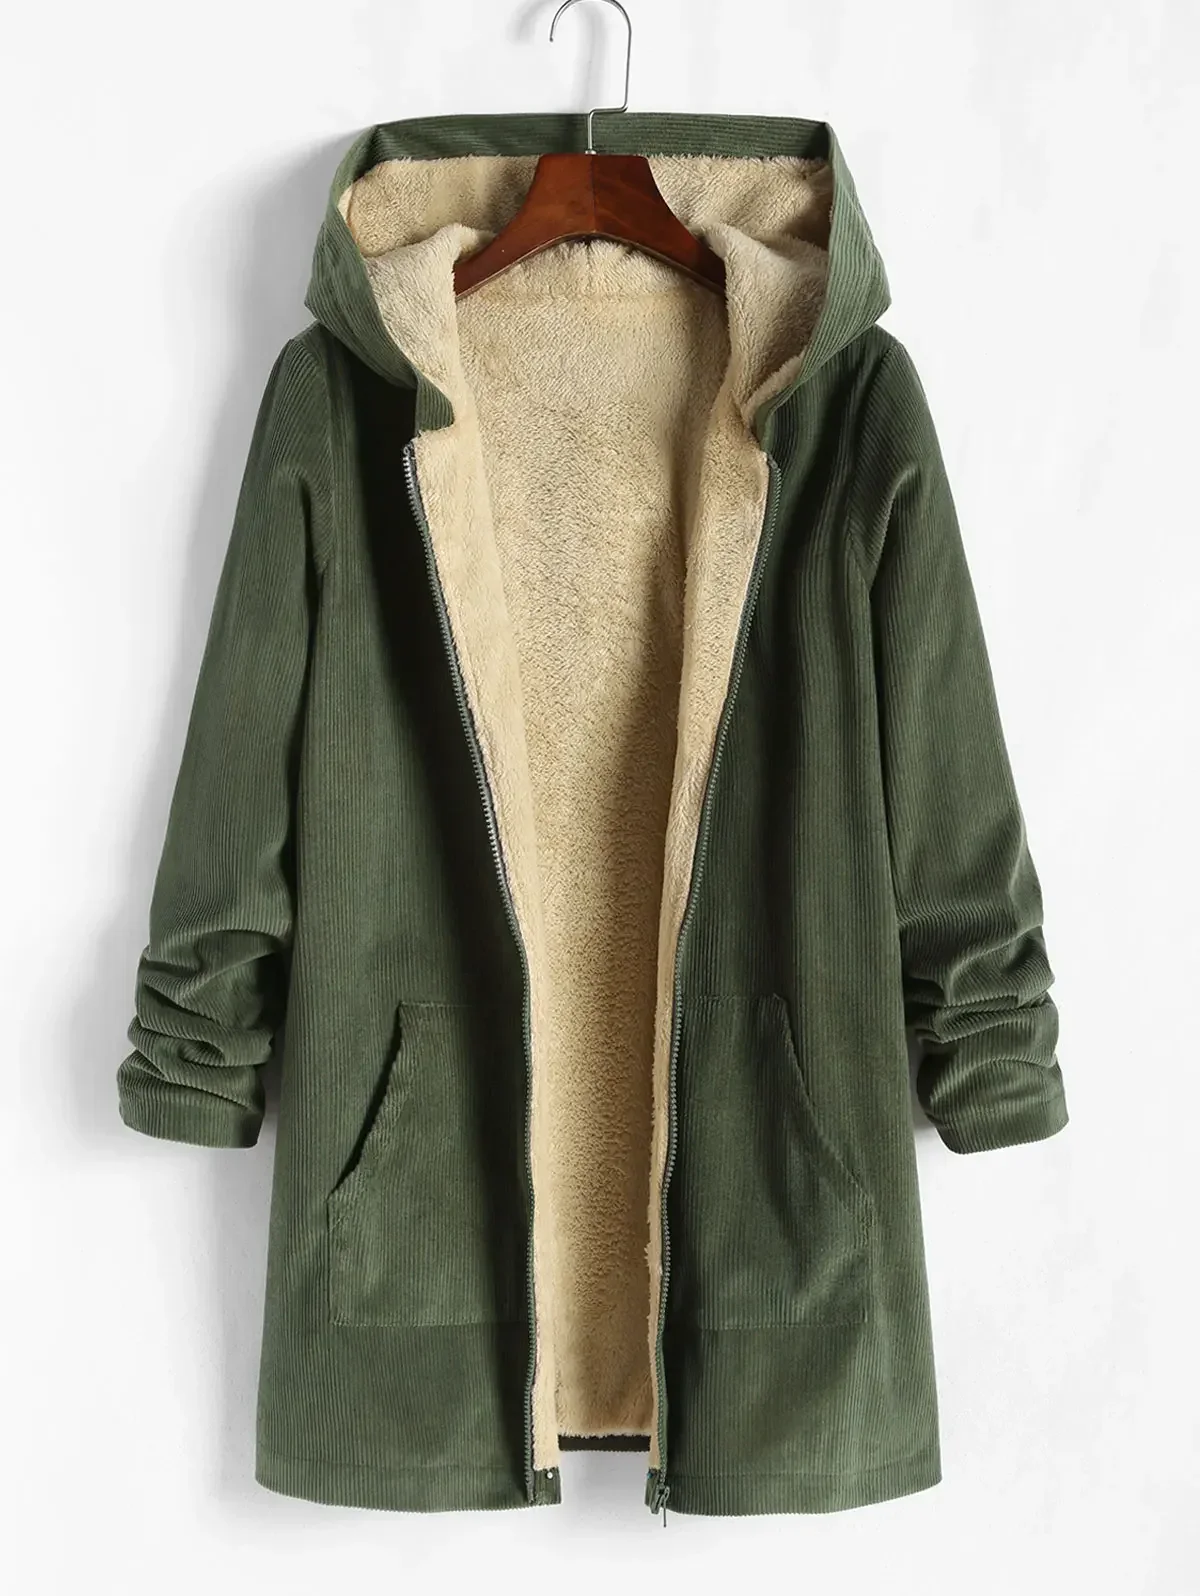 

ZAFUL Women's Stylish Autumn Winter Casual Outerwear Long Zipper Jacket with Corduroy Fleece Lining ZF506101365